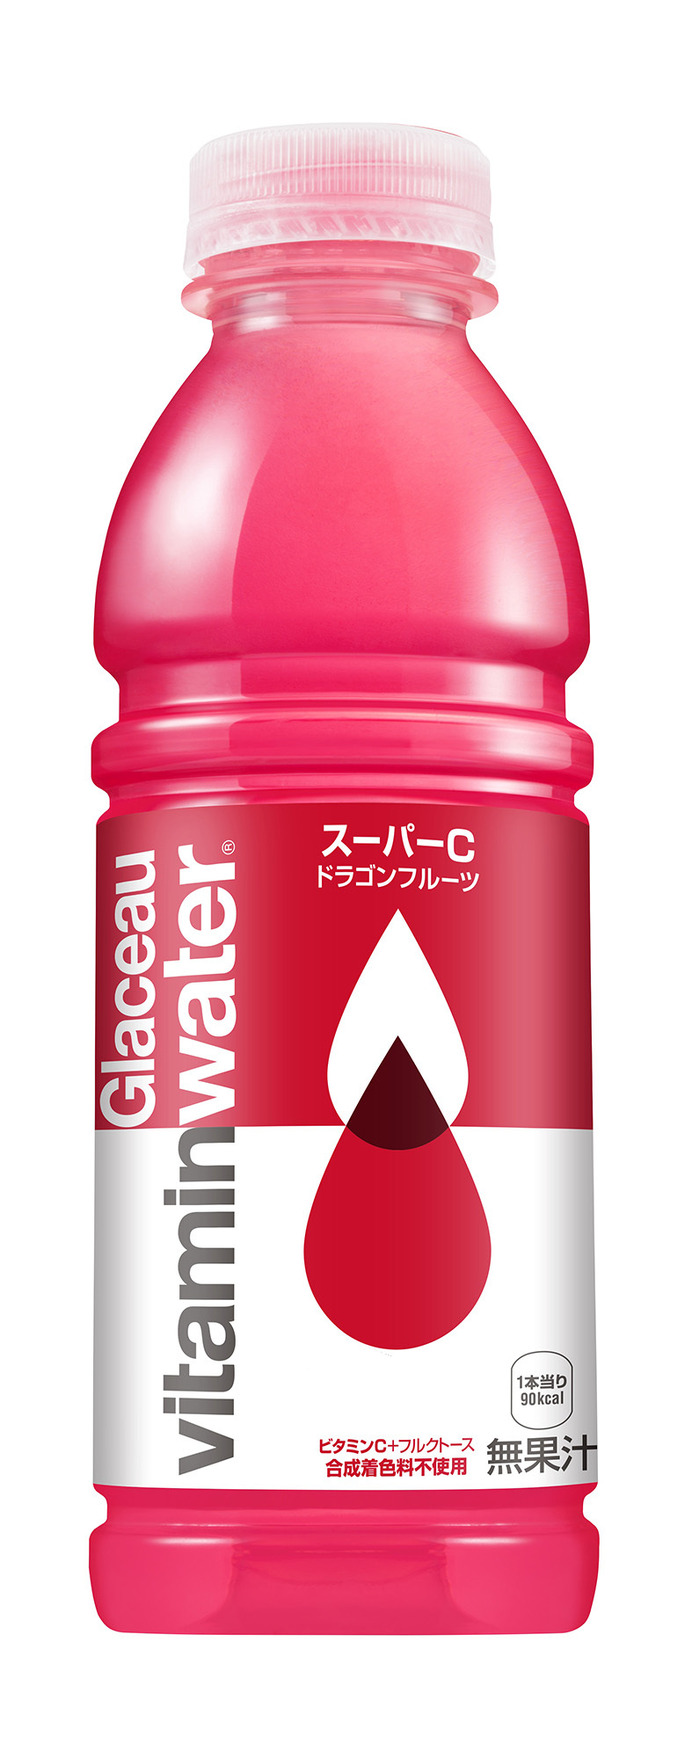 Glaceau vitaminwater（グラソー ビタミンウォーター）に新フレーバー「スーパーC」